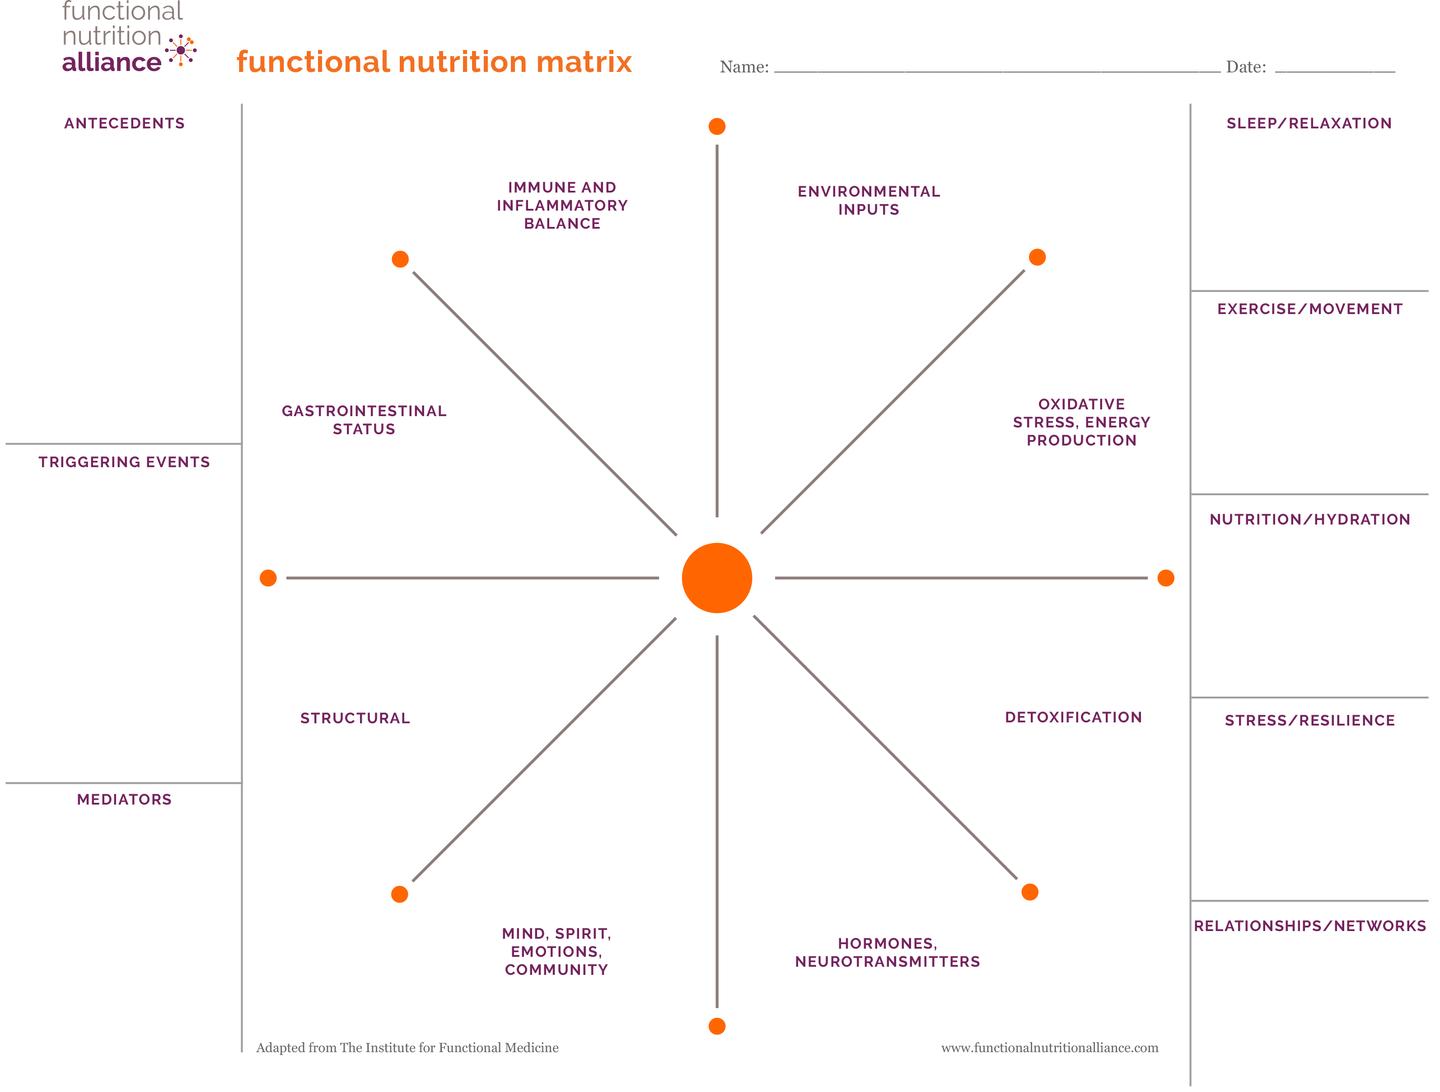 The functional nutrition matrix by Andrea Nakayama